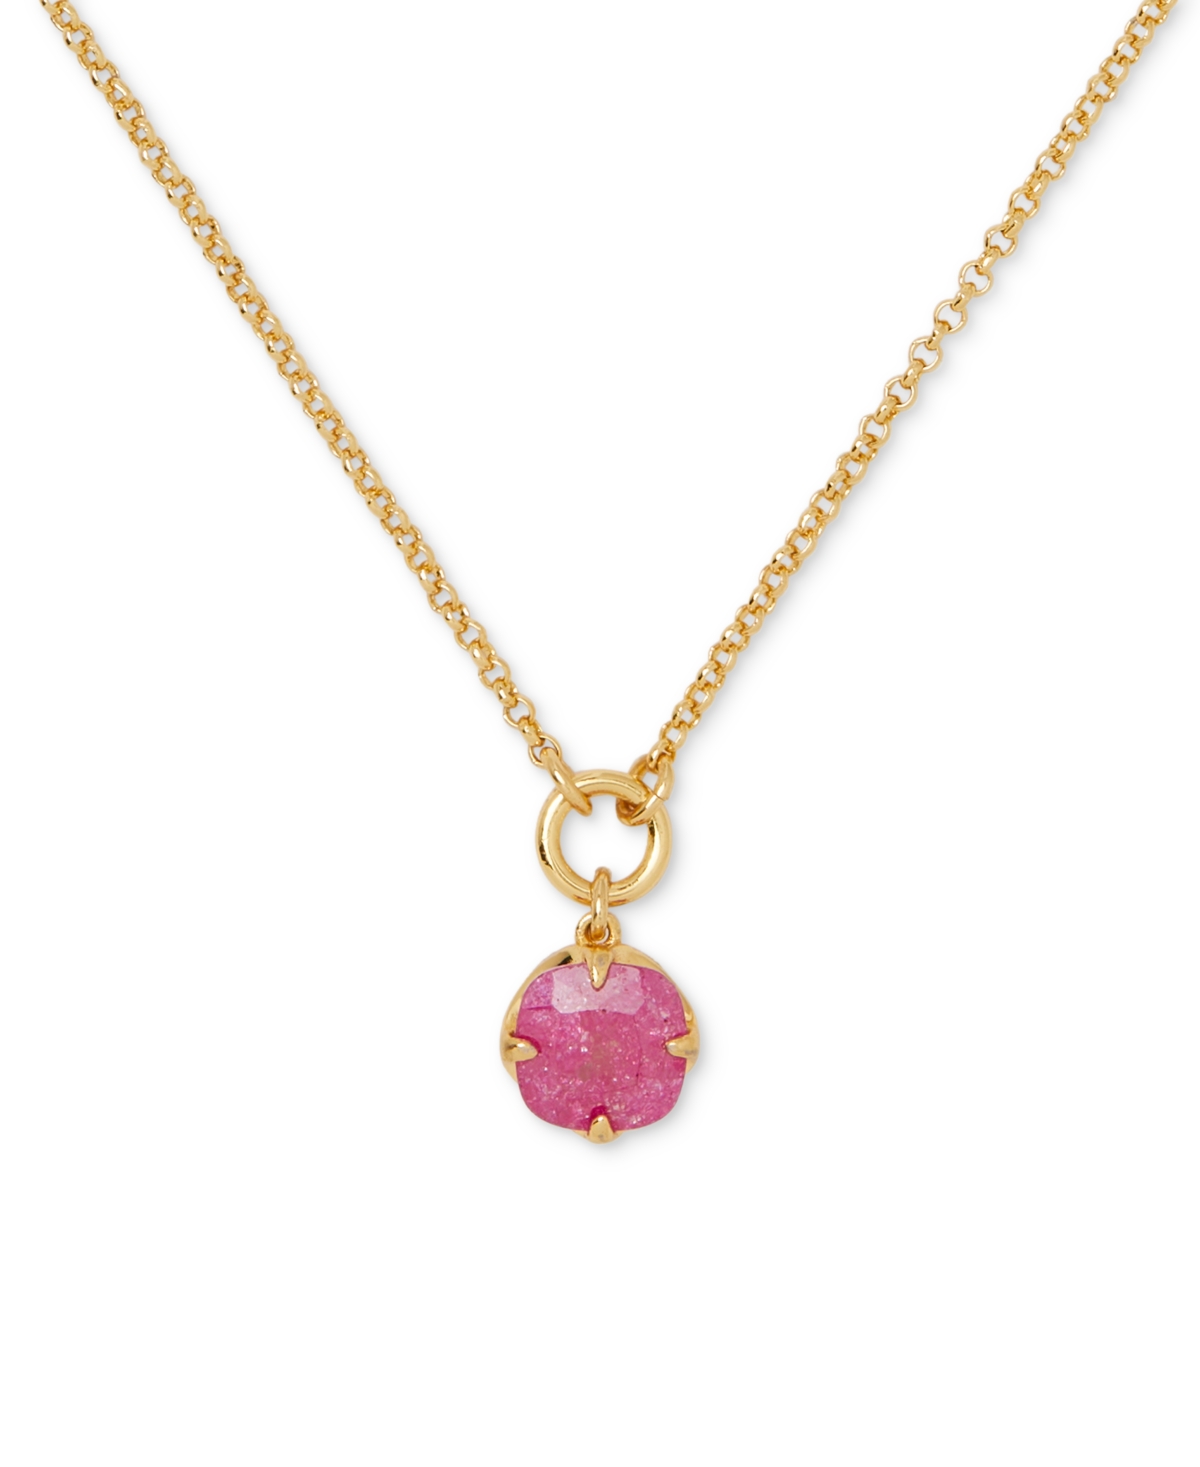 Gold-Tone Pop of Joy Spade Flower Pendant Necklace, 16" + 3" extender - Fuchsia.